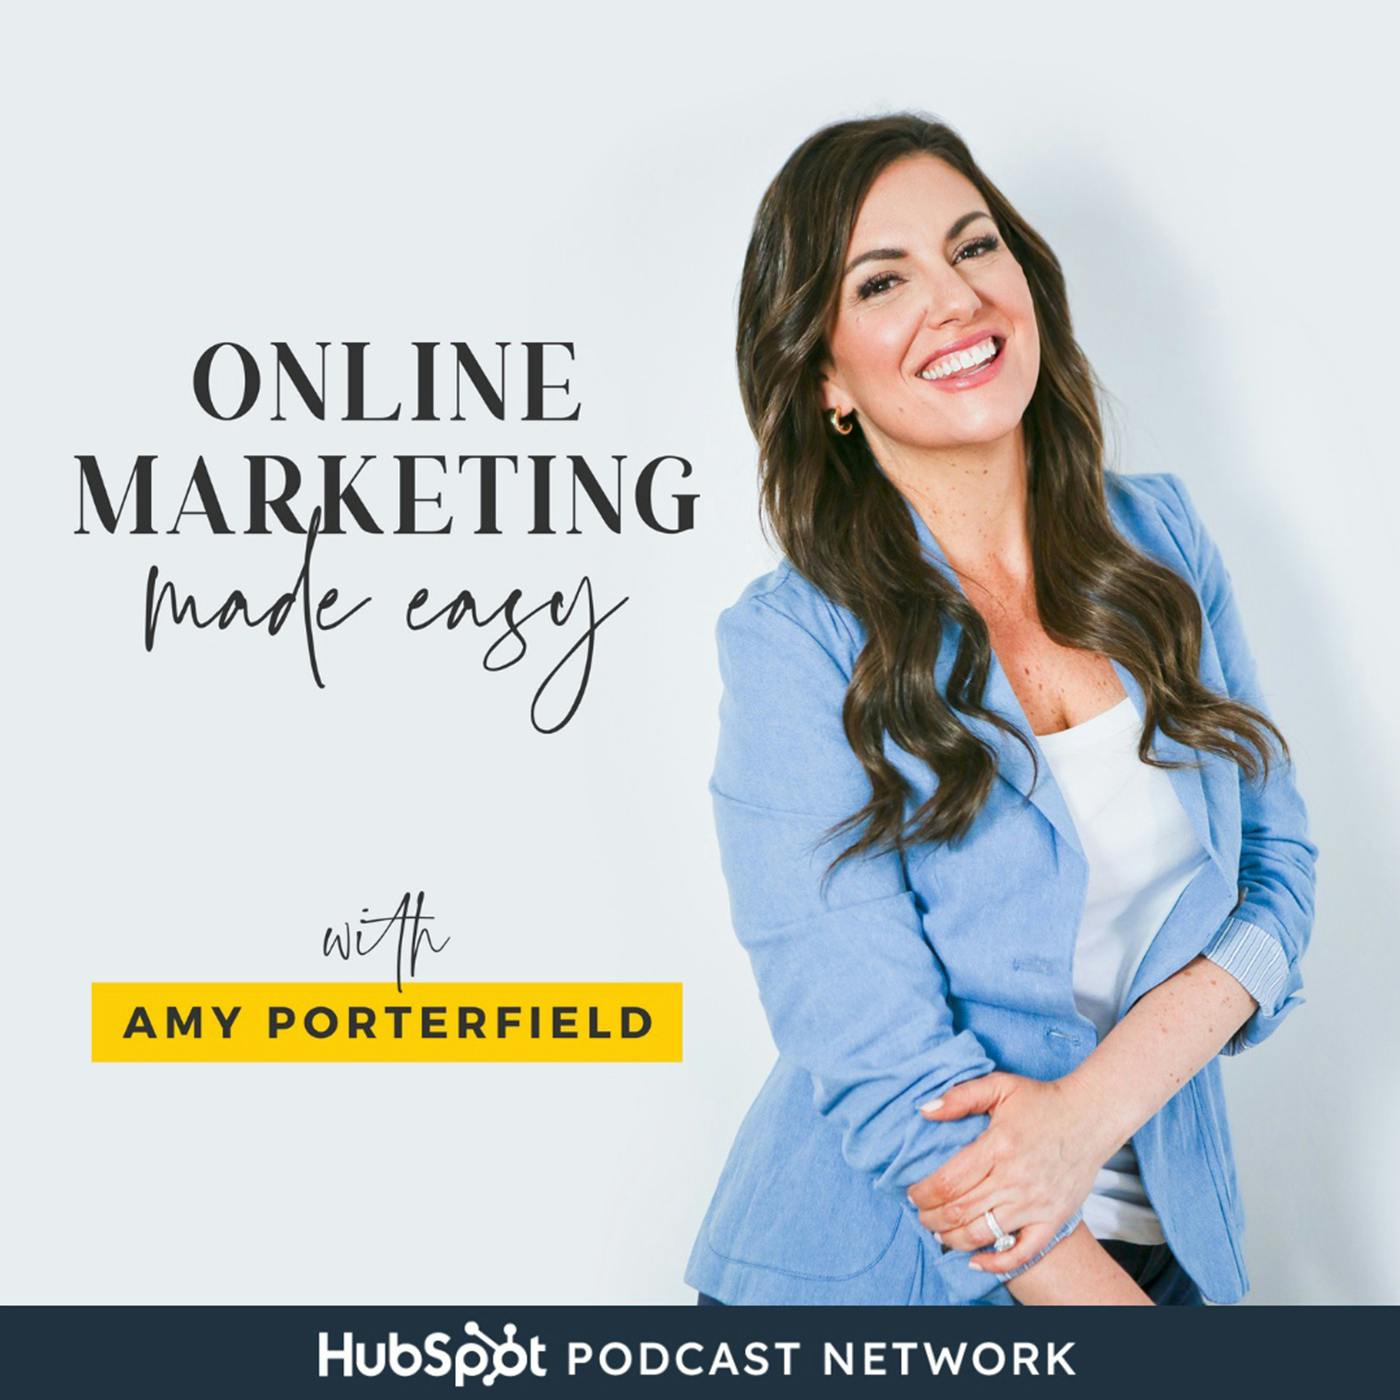 Online Marketing Made Easy with Amy Porterfield:Amy Porterfield